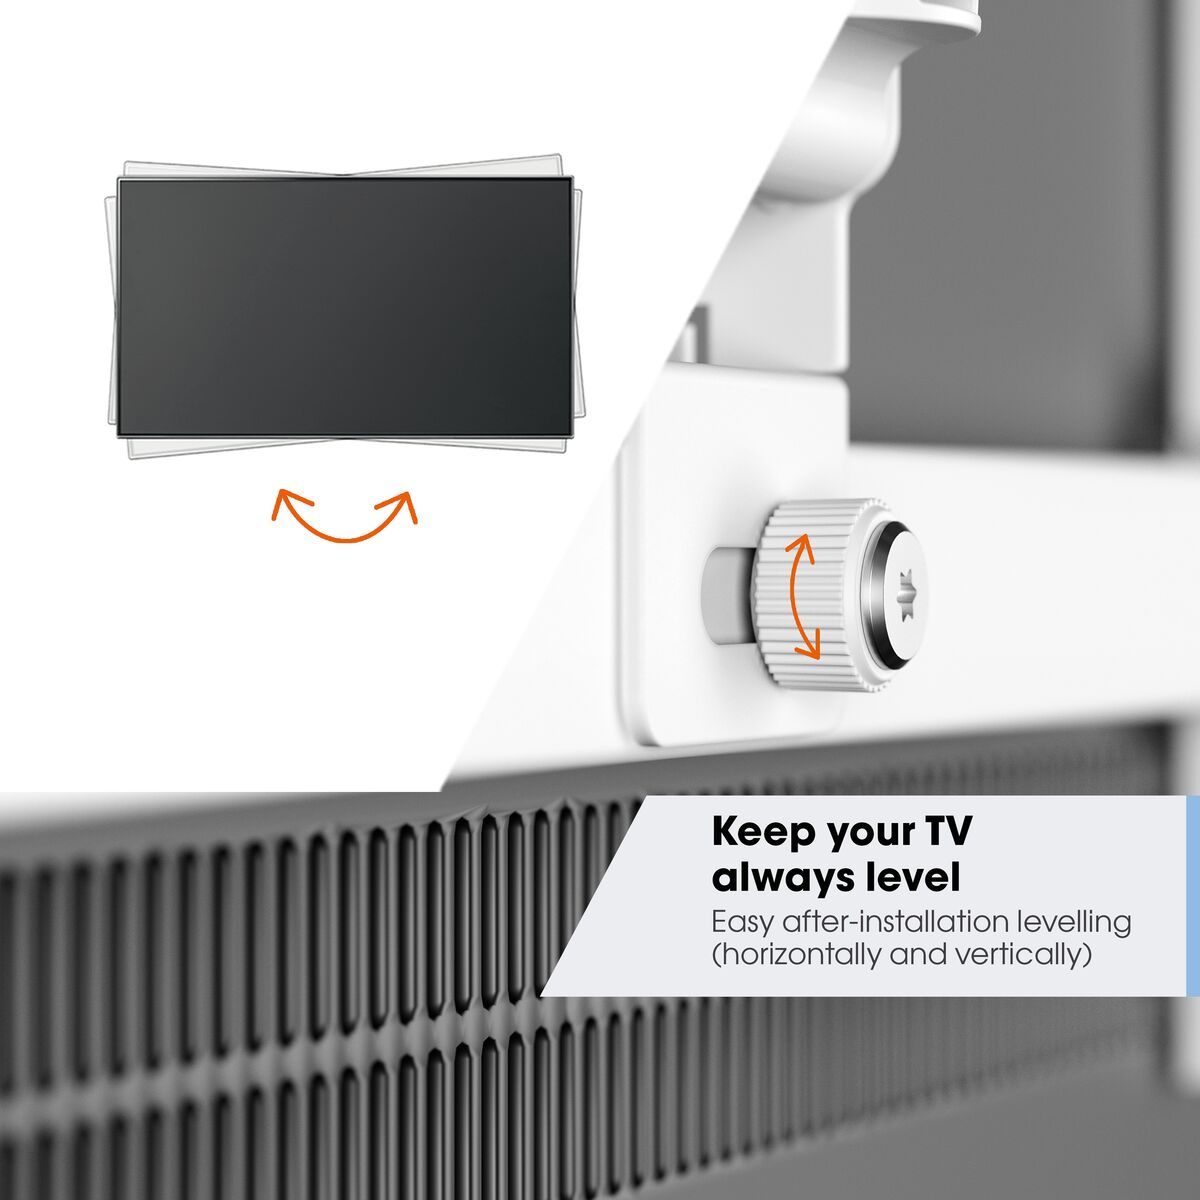 Vogel's TVM 3243 Full-Motion TV Wall Mount (white) - Suitable for 19 up to 43 inch TVs - Full motion (up to 180°) swivel - Tilt up to 20° - USP